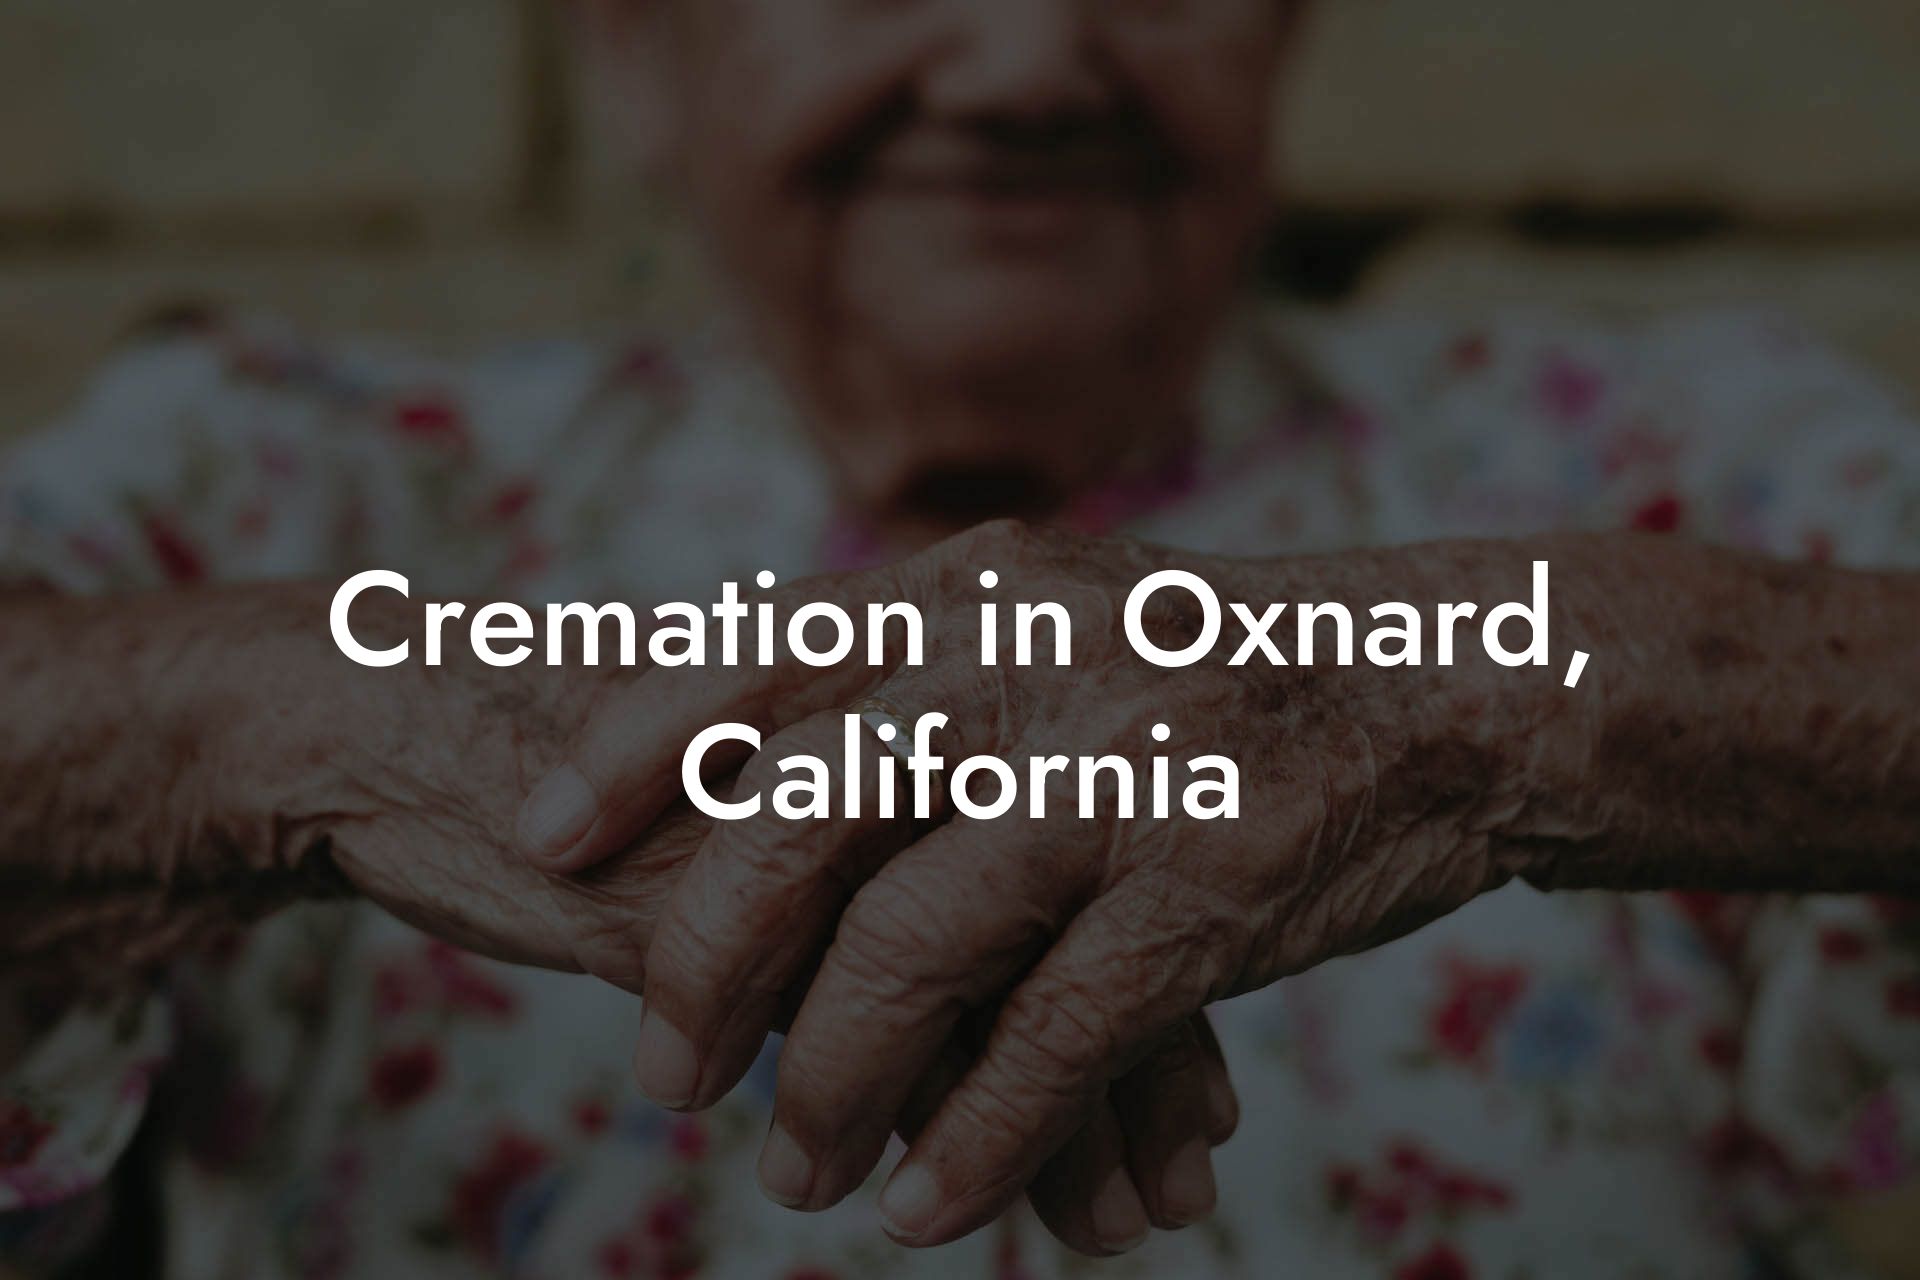 Cremation in Oxnard, California